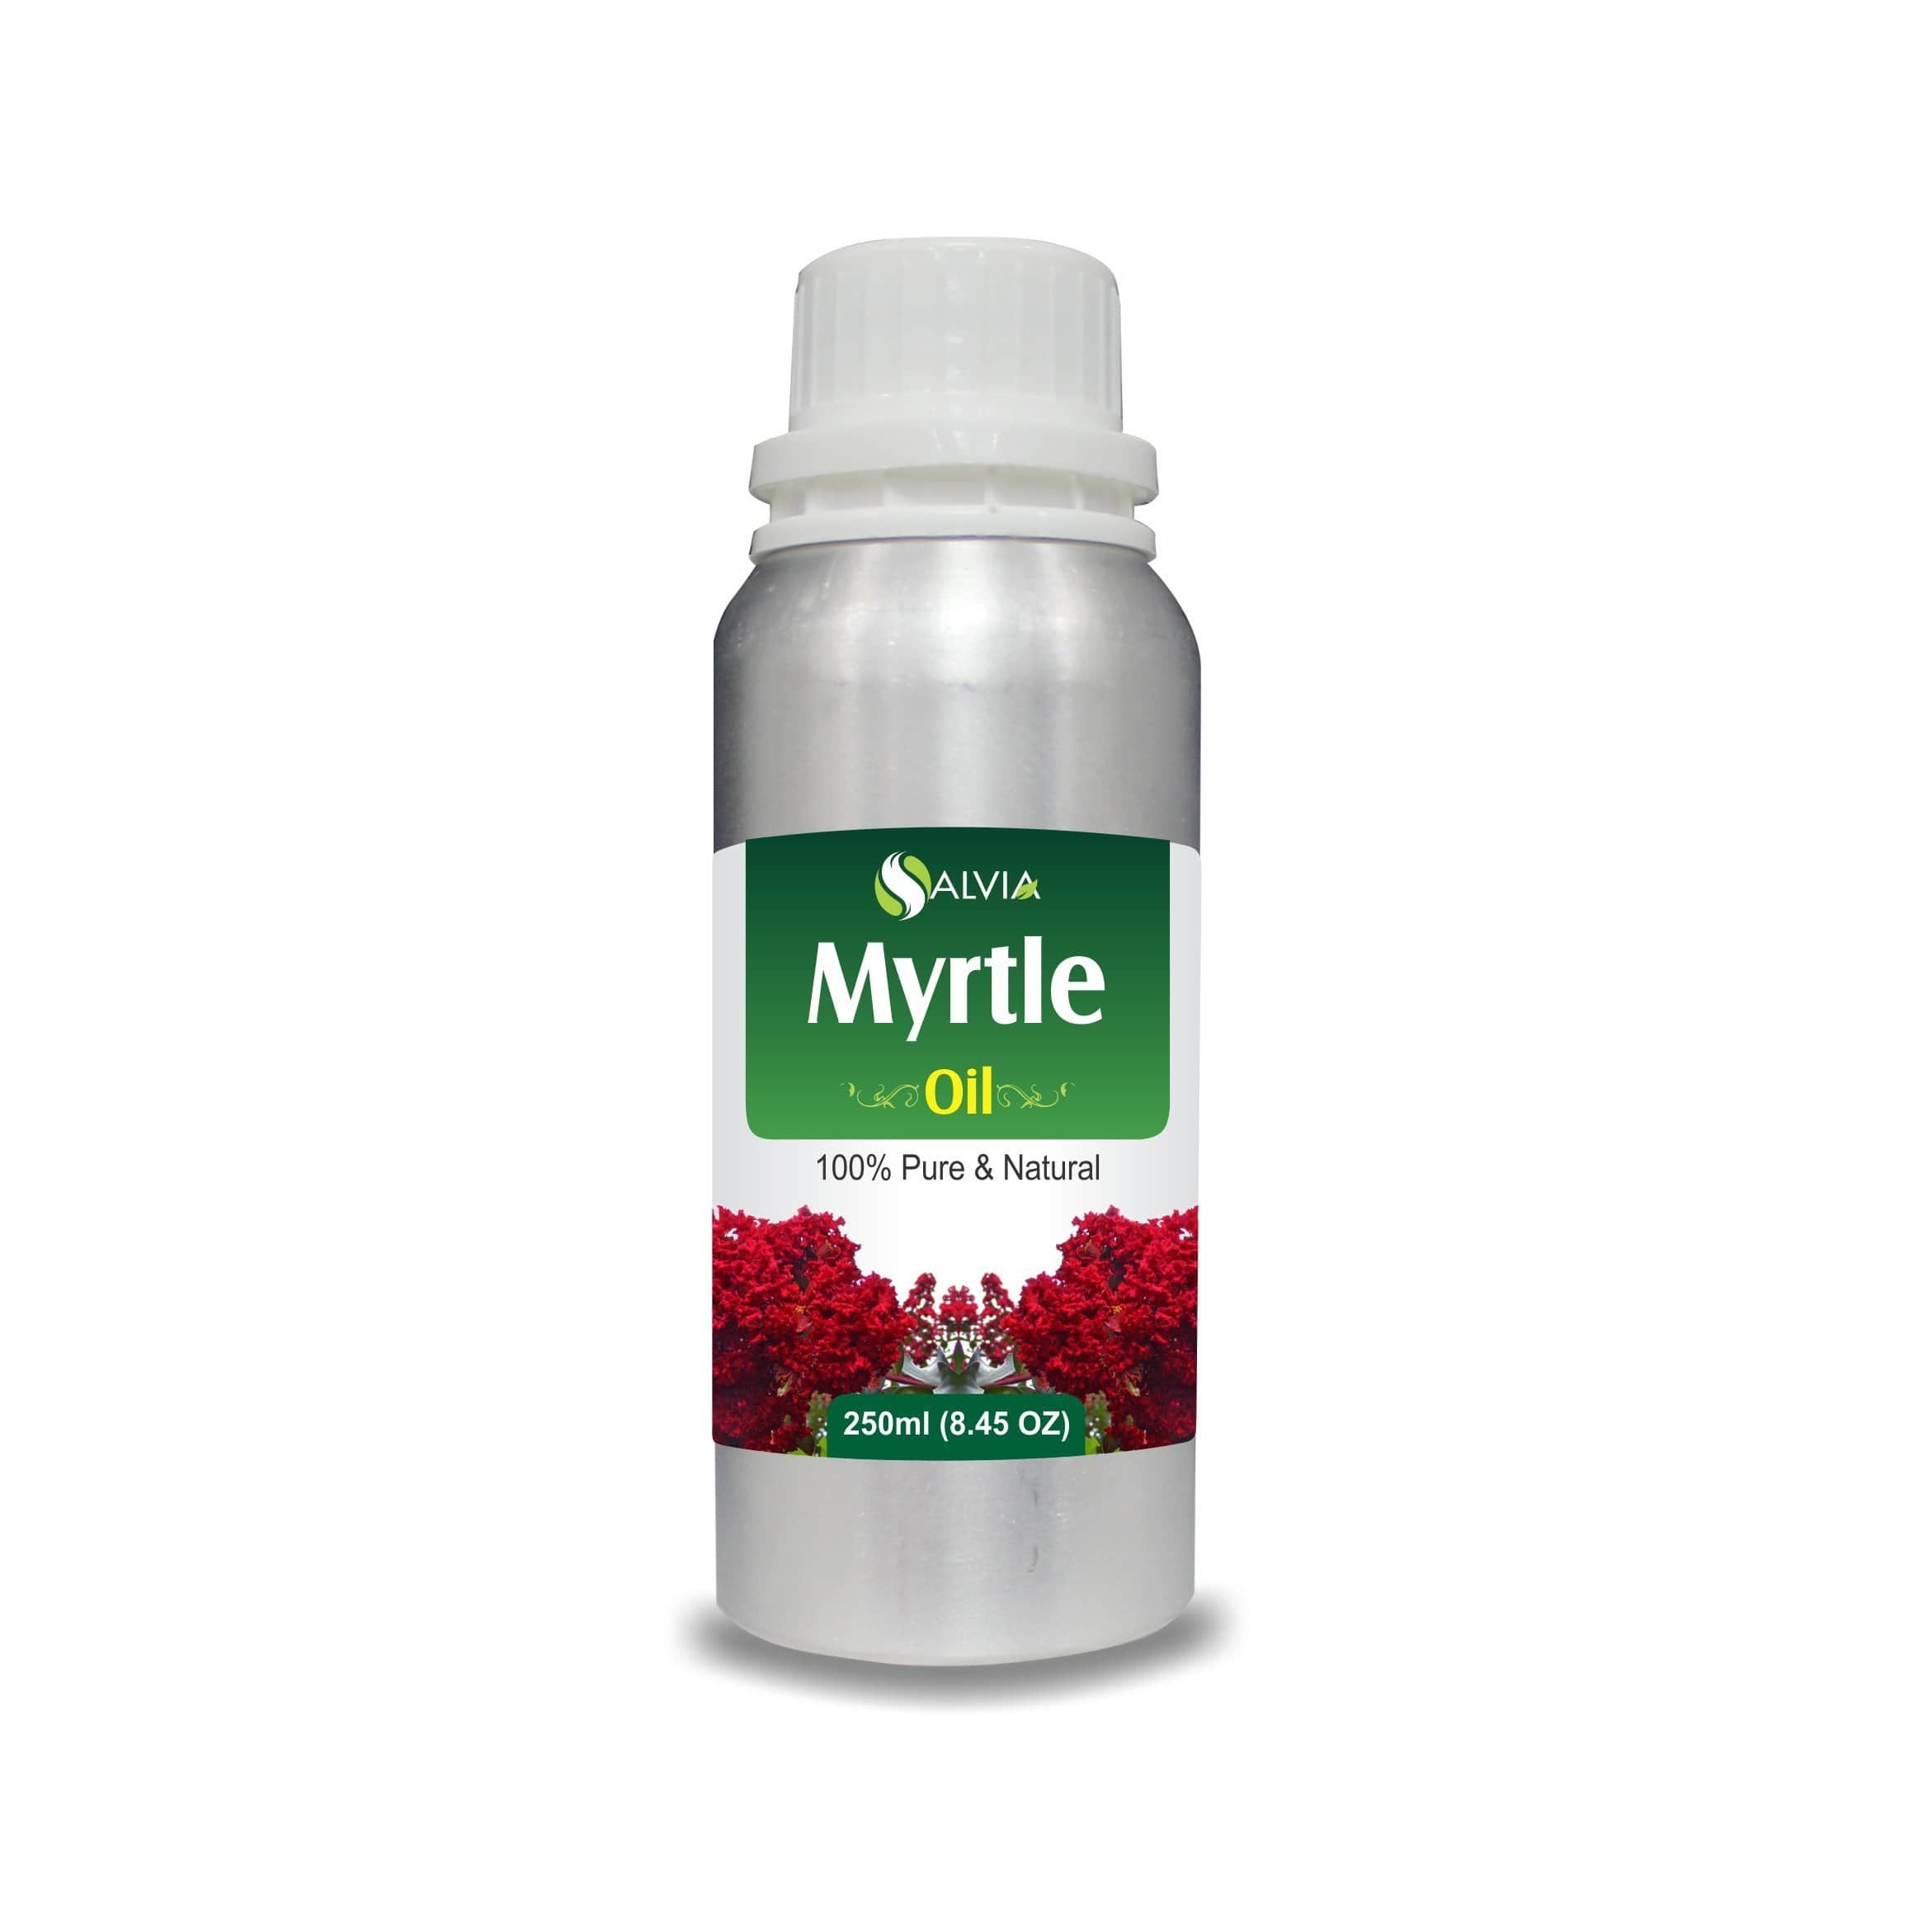 myrtle oil benefits